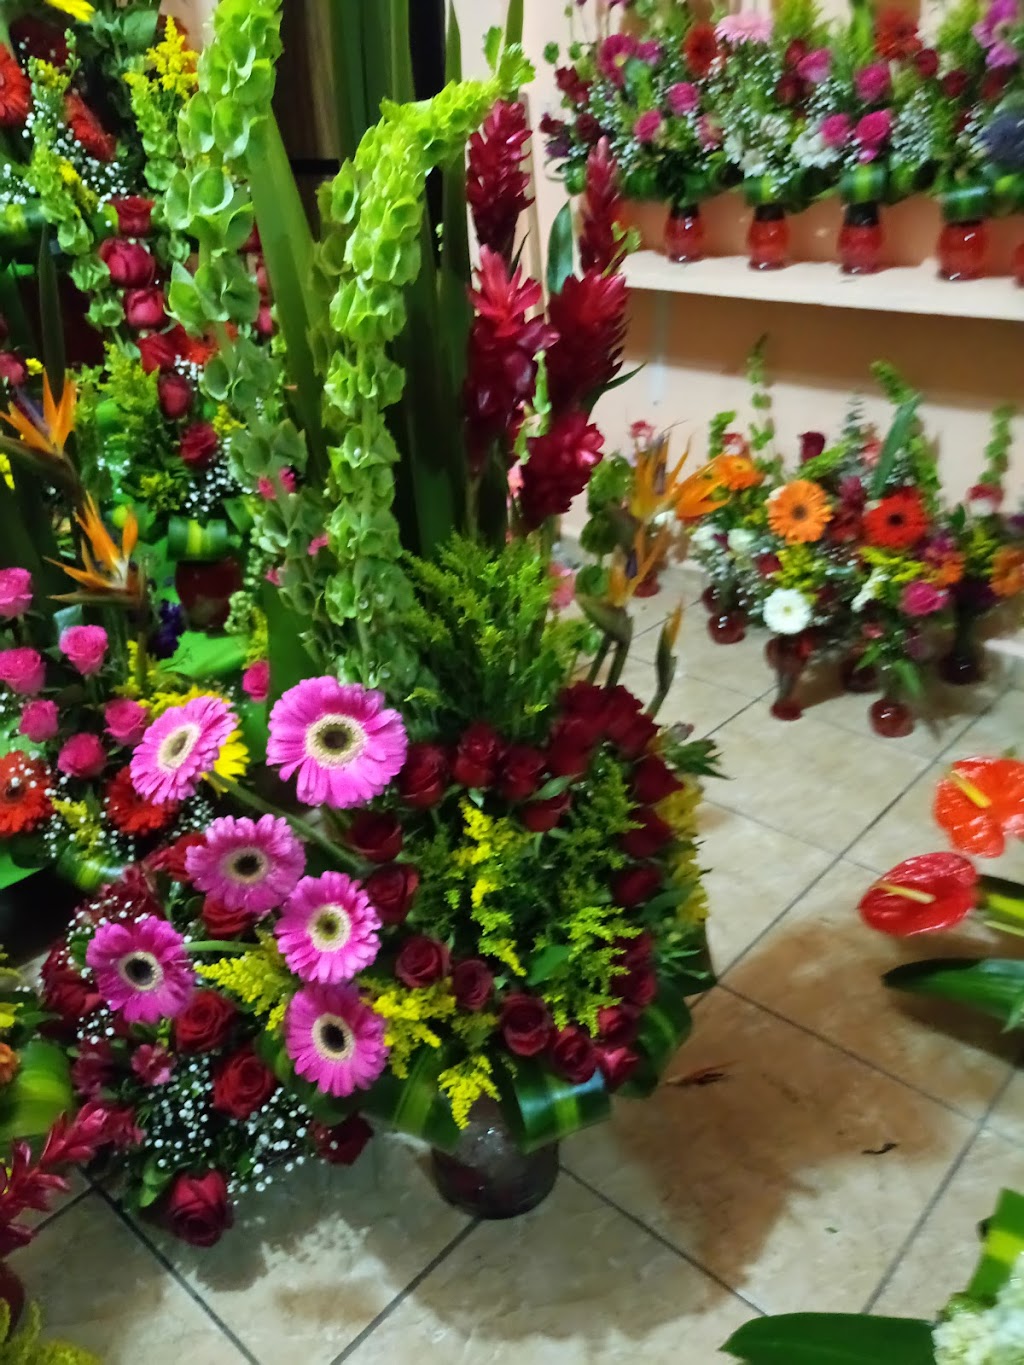 Floreria Bambule | Gral. Mariano Escobedo 203, Zona centro, 65030 Anáhuac, N.L., Mexico | Phone: 873 737 2519